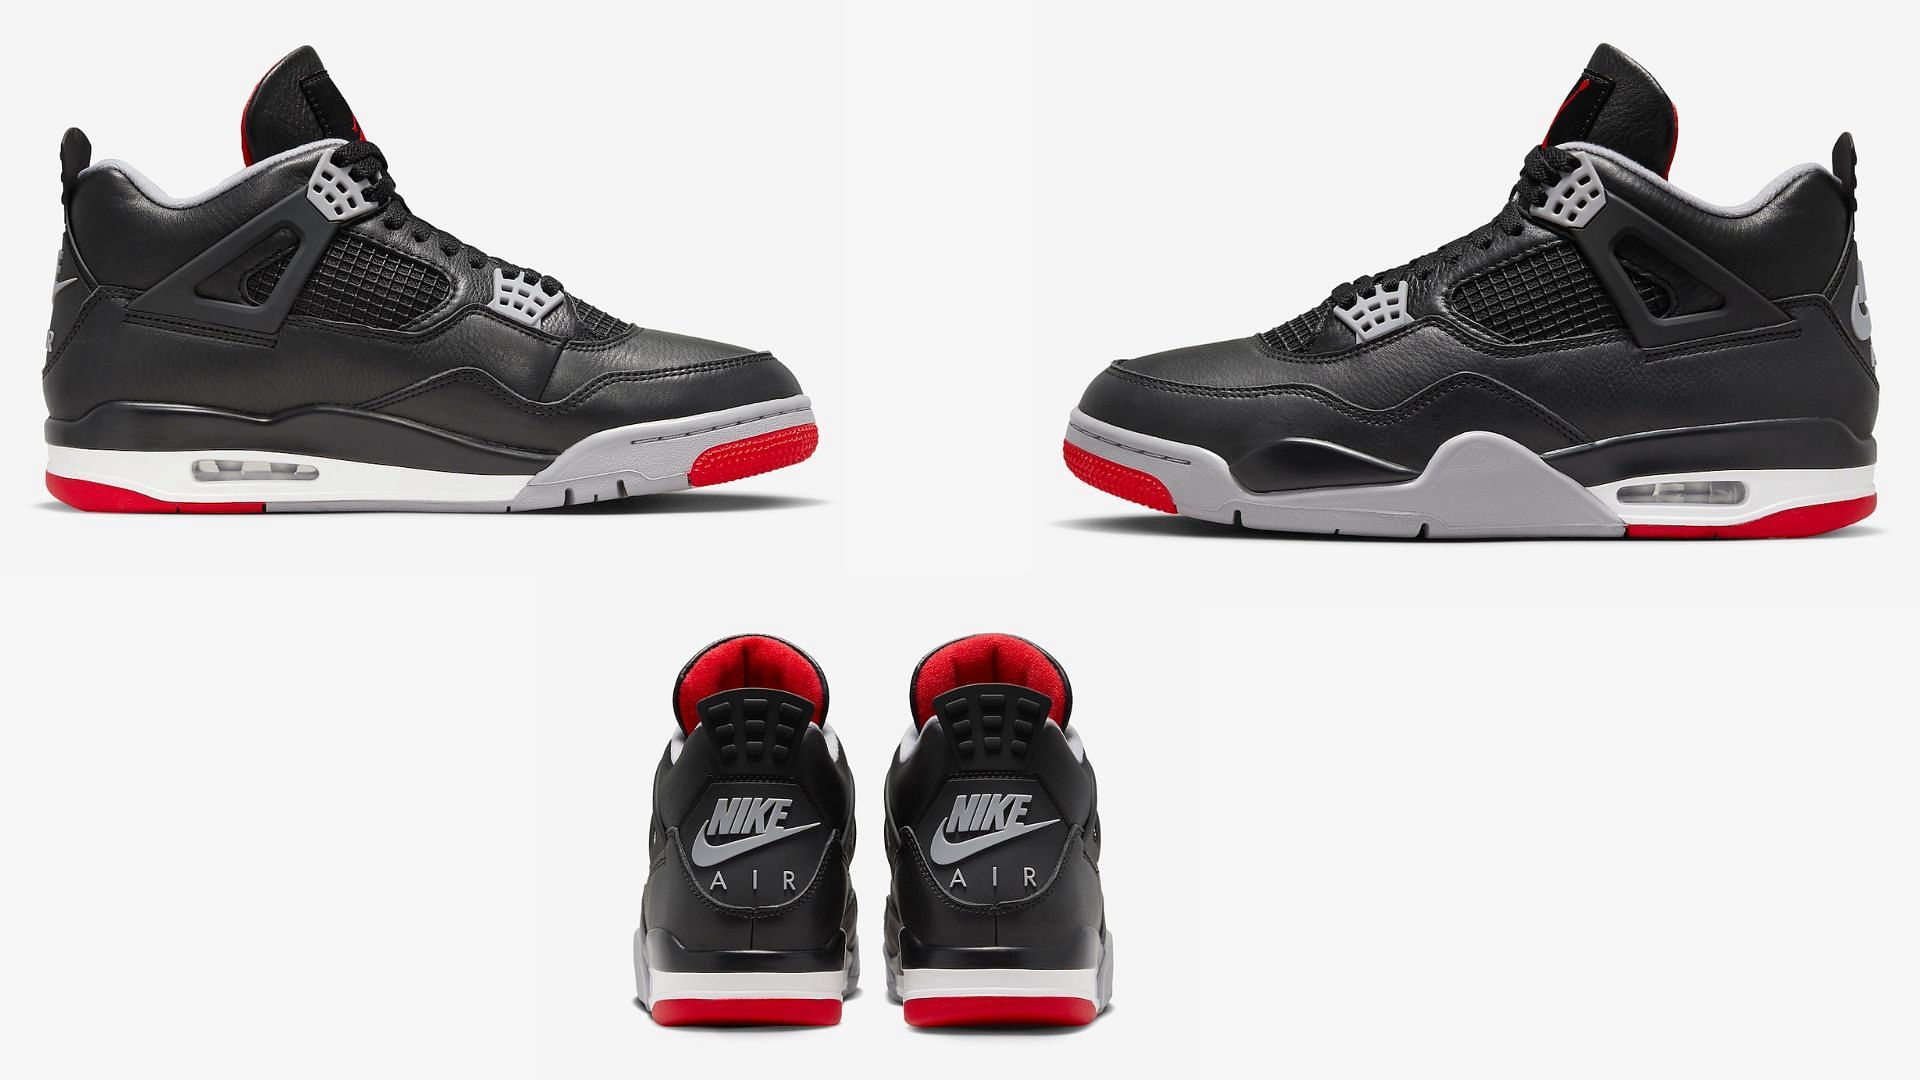 A closer look at the Air Jordan 4 Bred Reimagined sneakers (Image via Instagram/@zsneakerheadz)